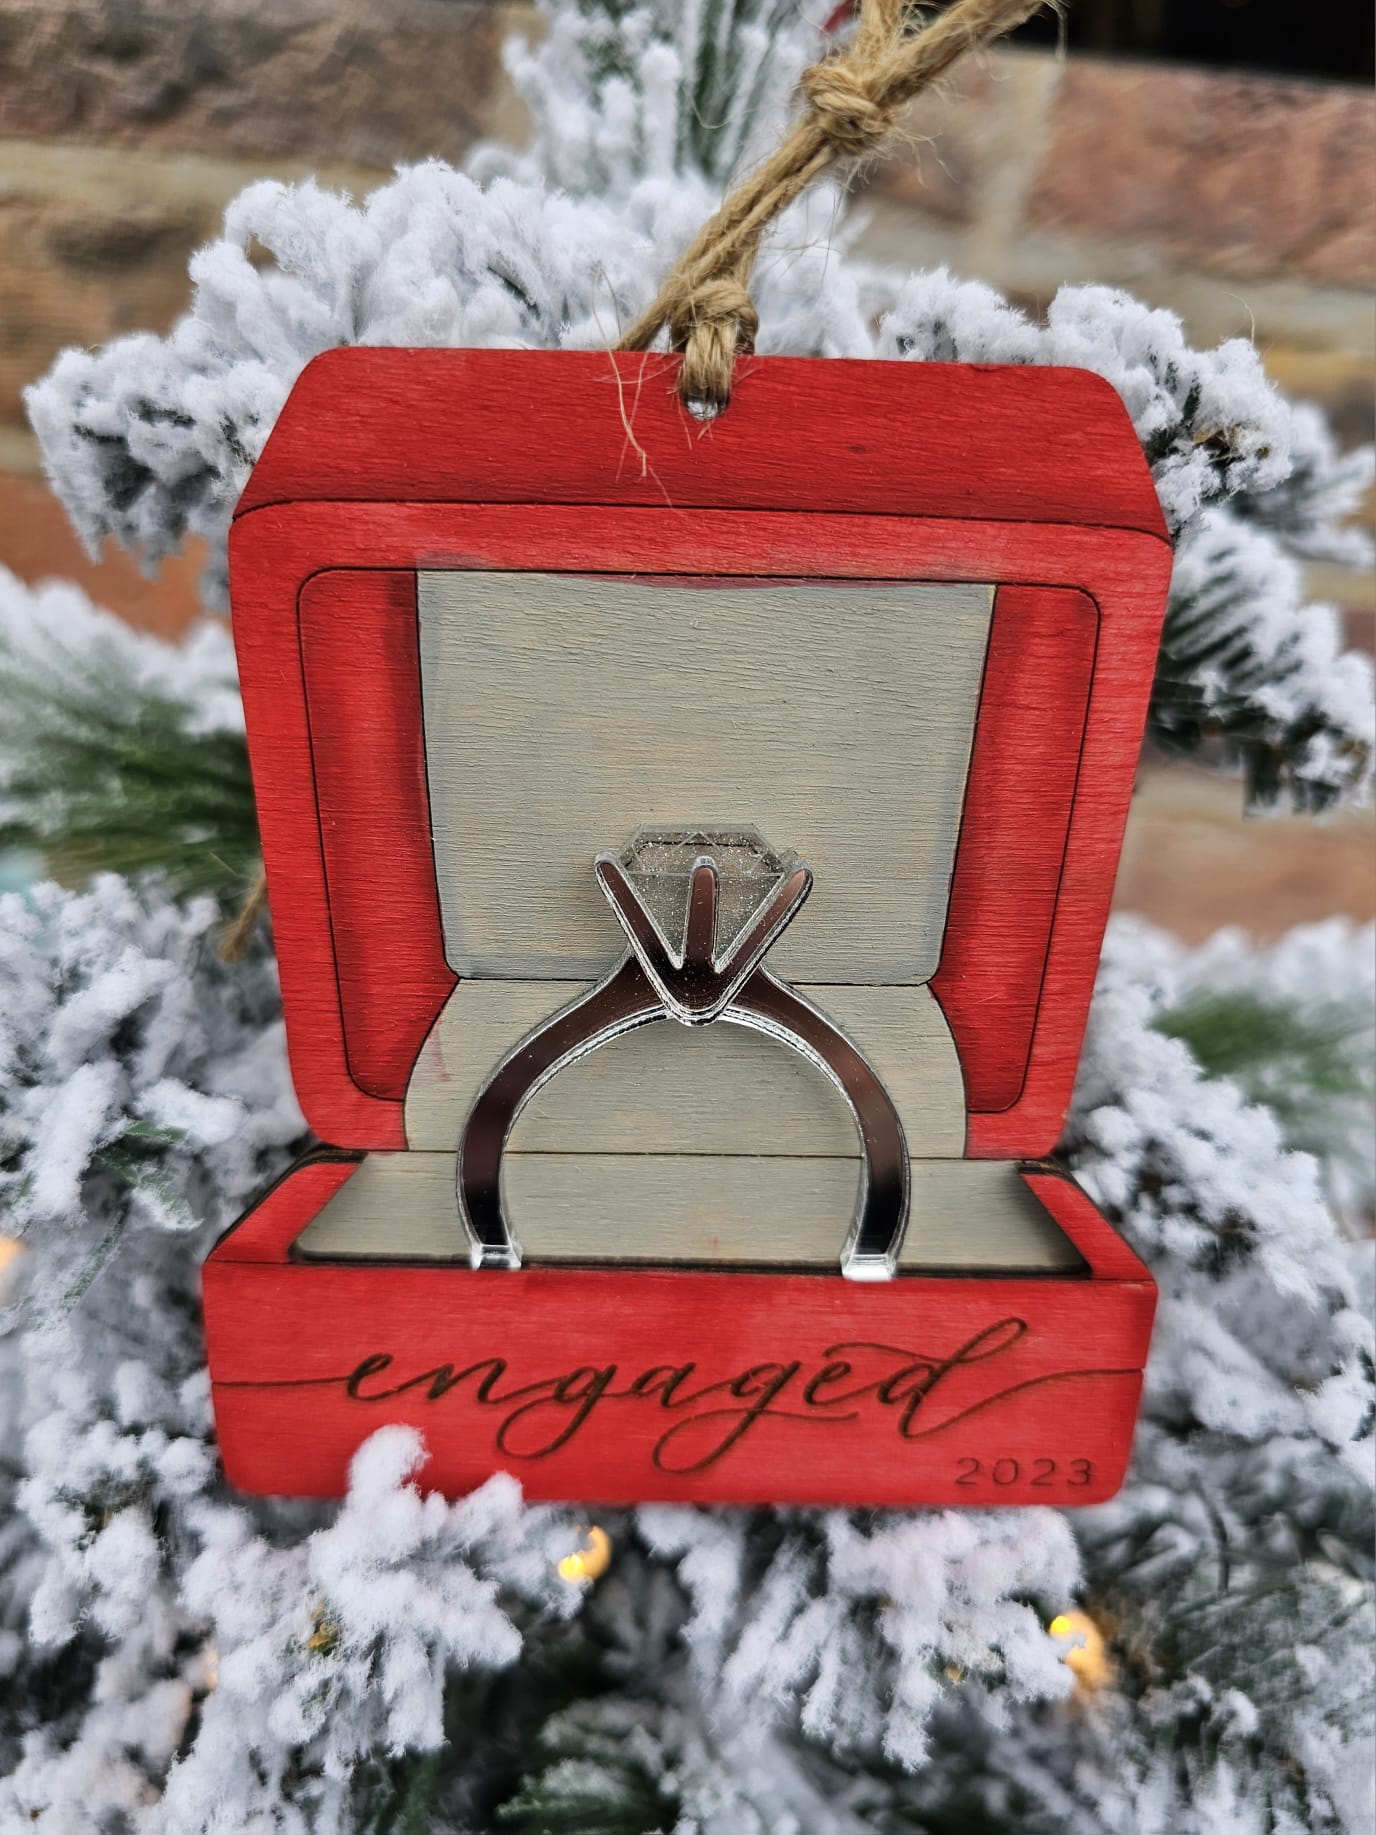 Engaged ring box ornament